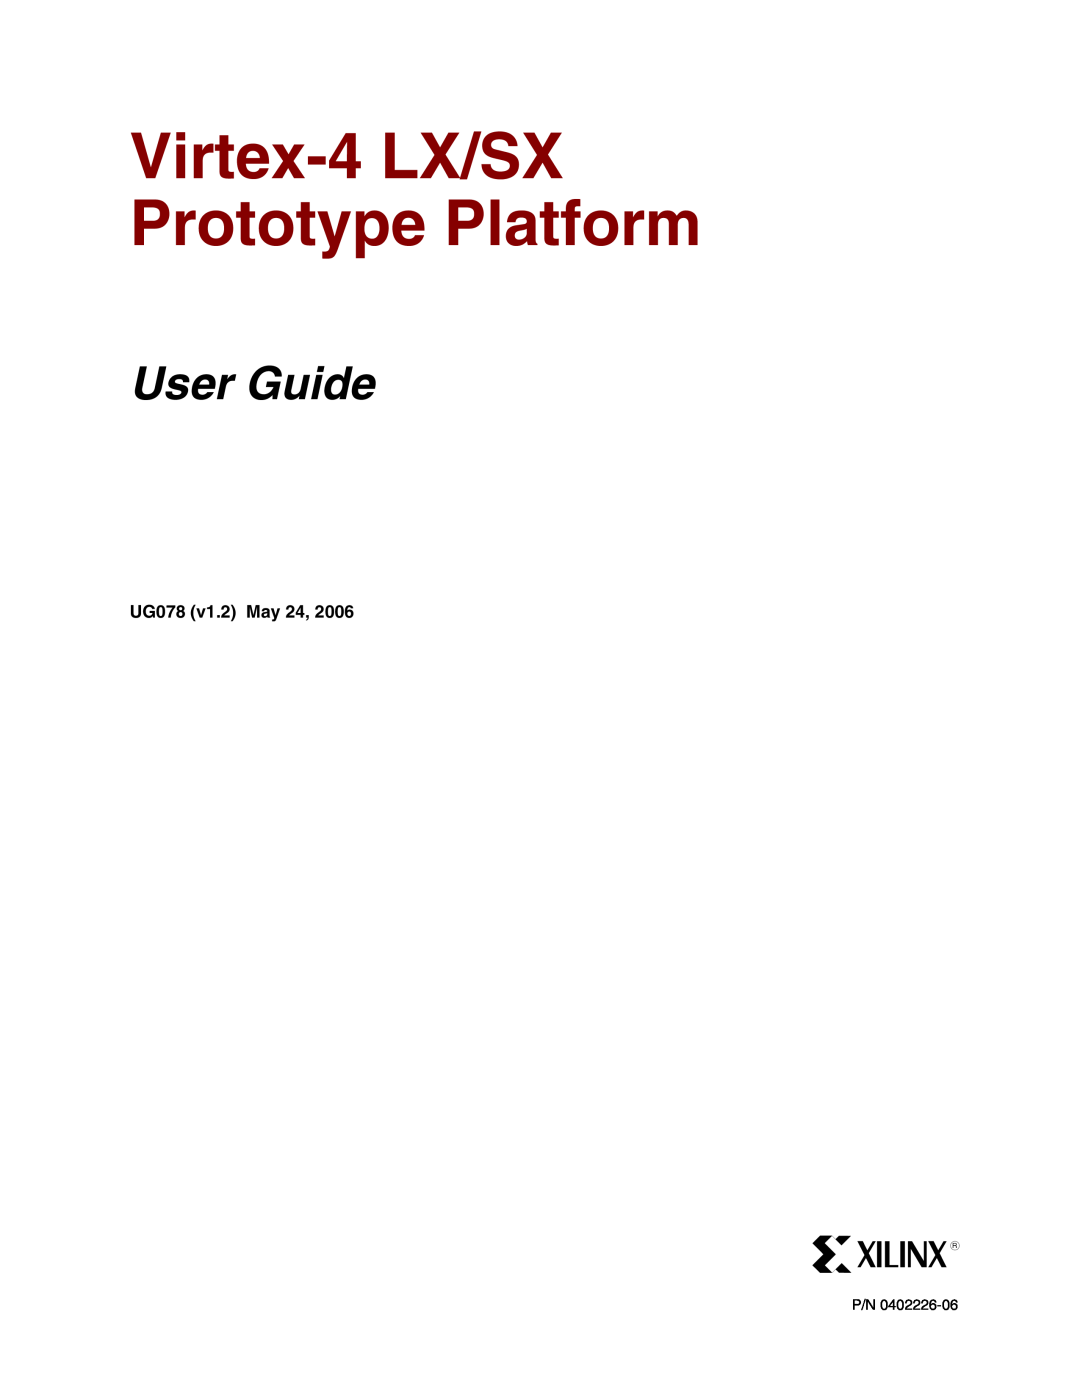 Xilinx manual UG078 v1.2 May, Virtex-4LX/SX Prototype Platform, User Guide 